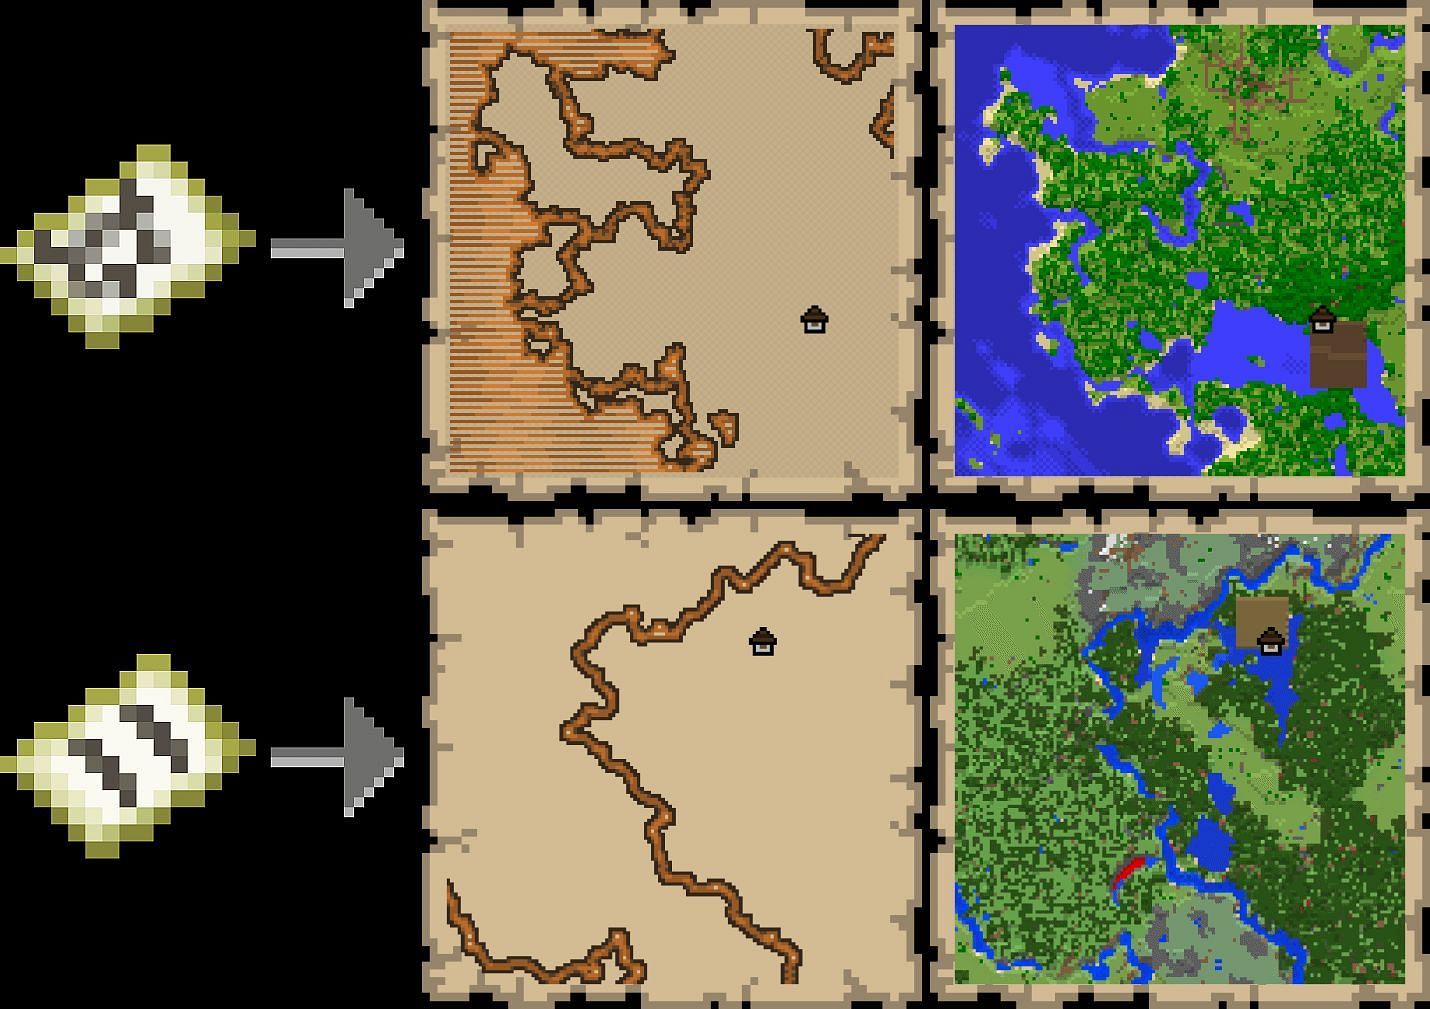 Explorer maps (Image via lookingforseed)